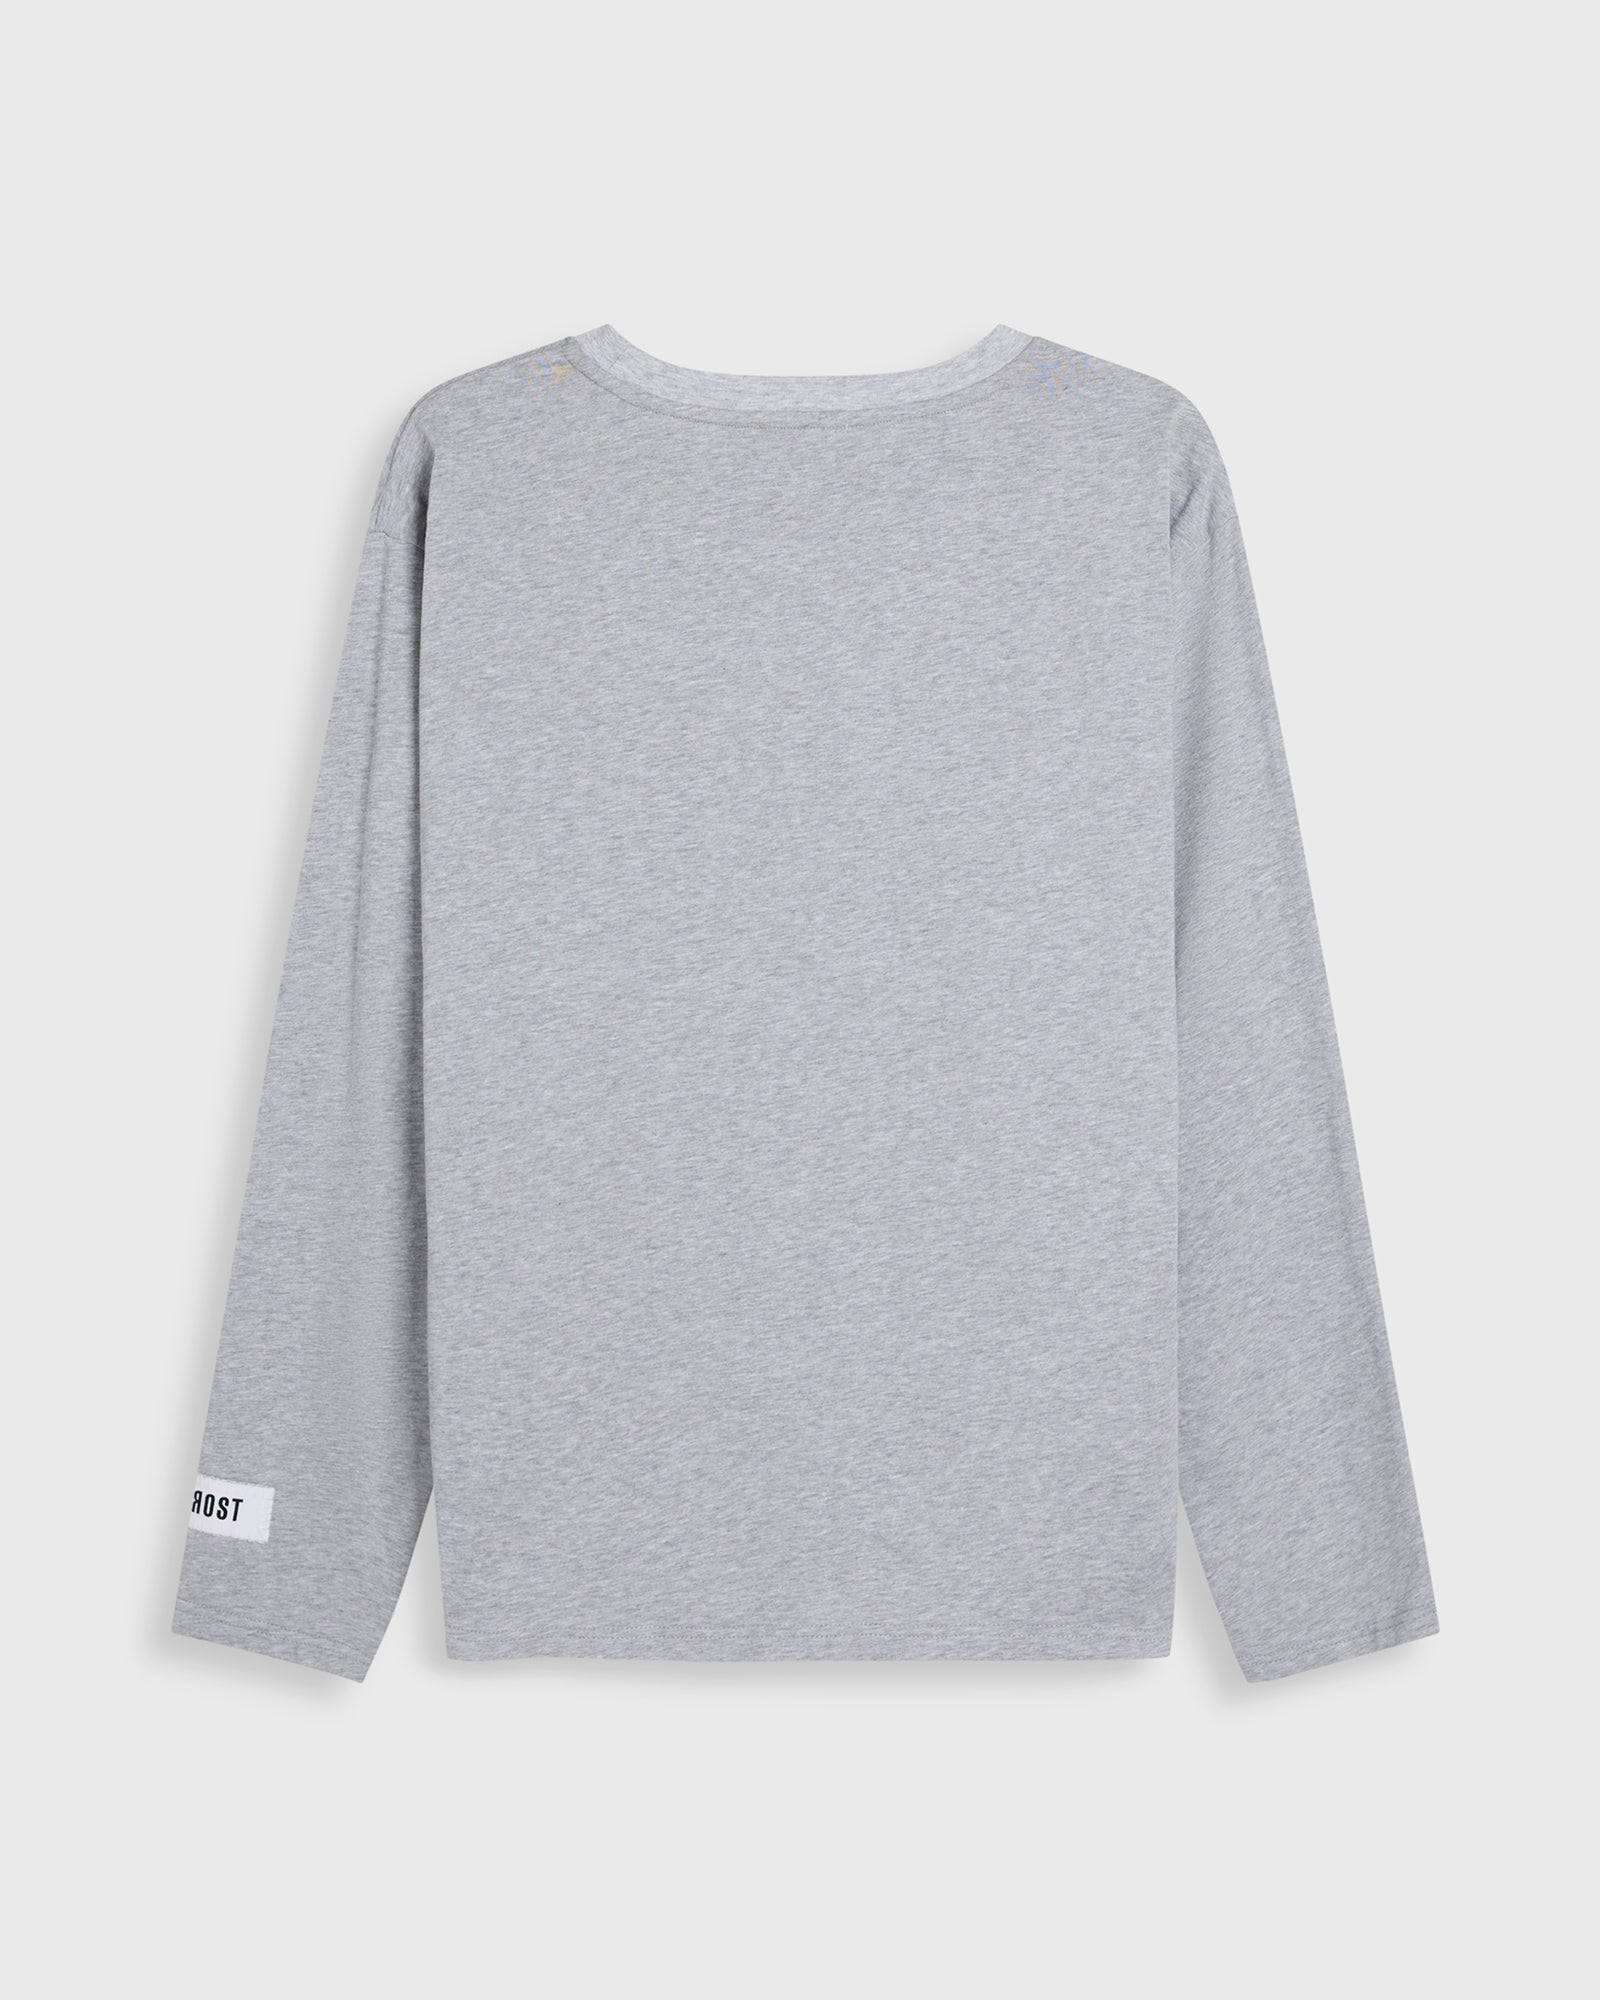 Sunrise grey long sleeve tee t shirt 100% cotton unisex fit for men & women